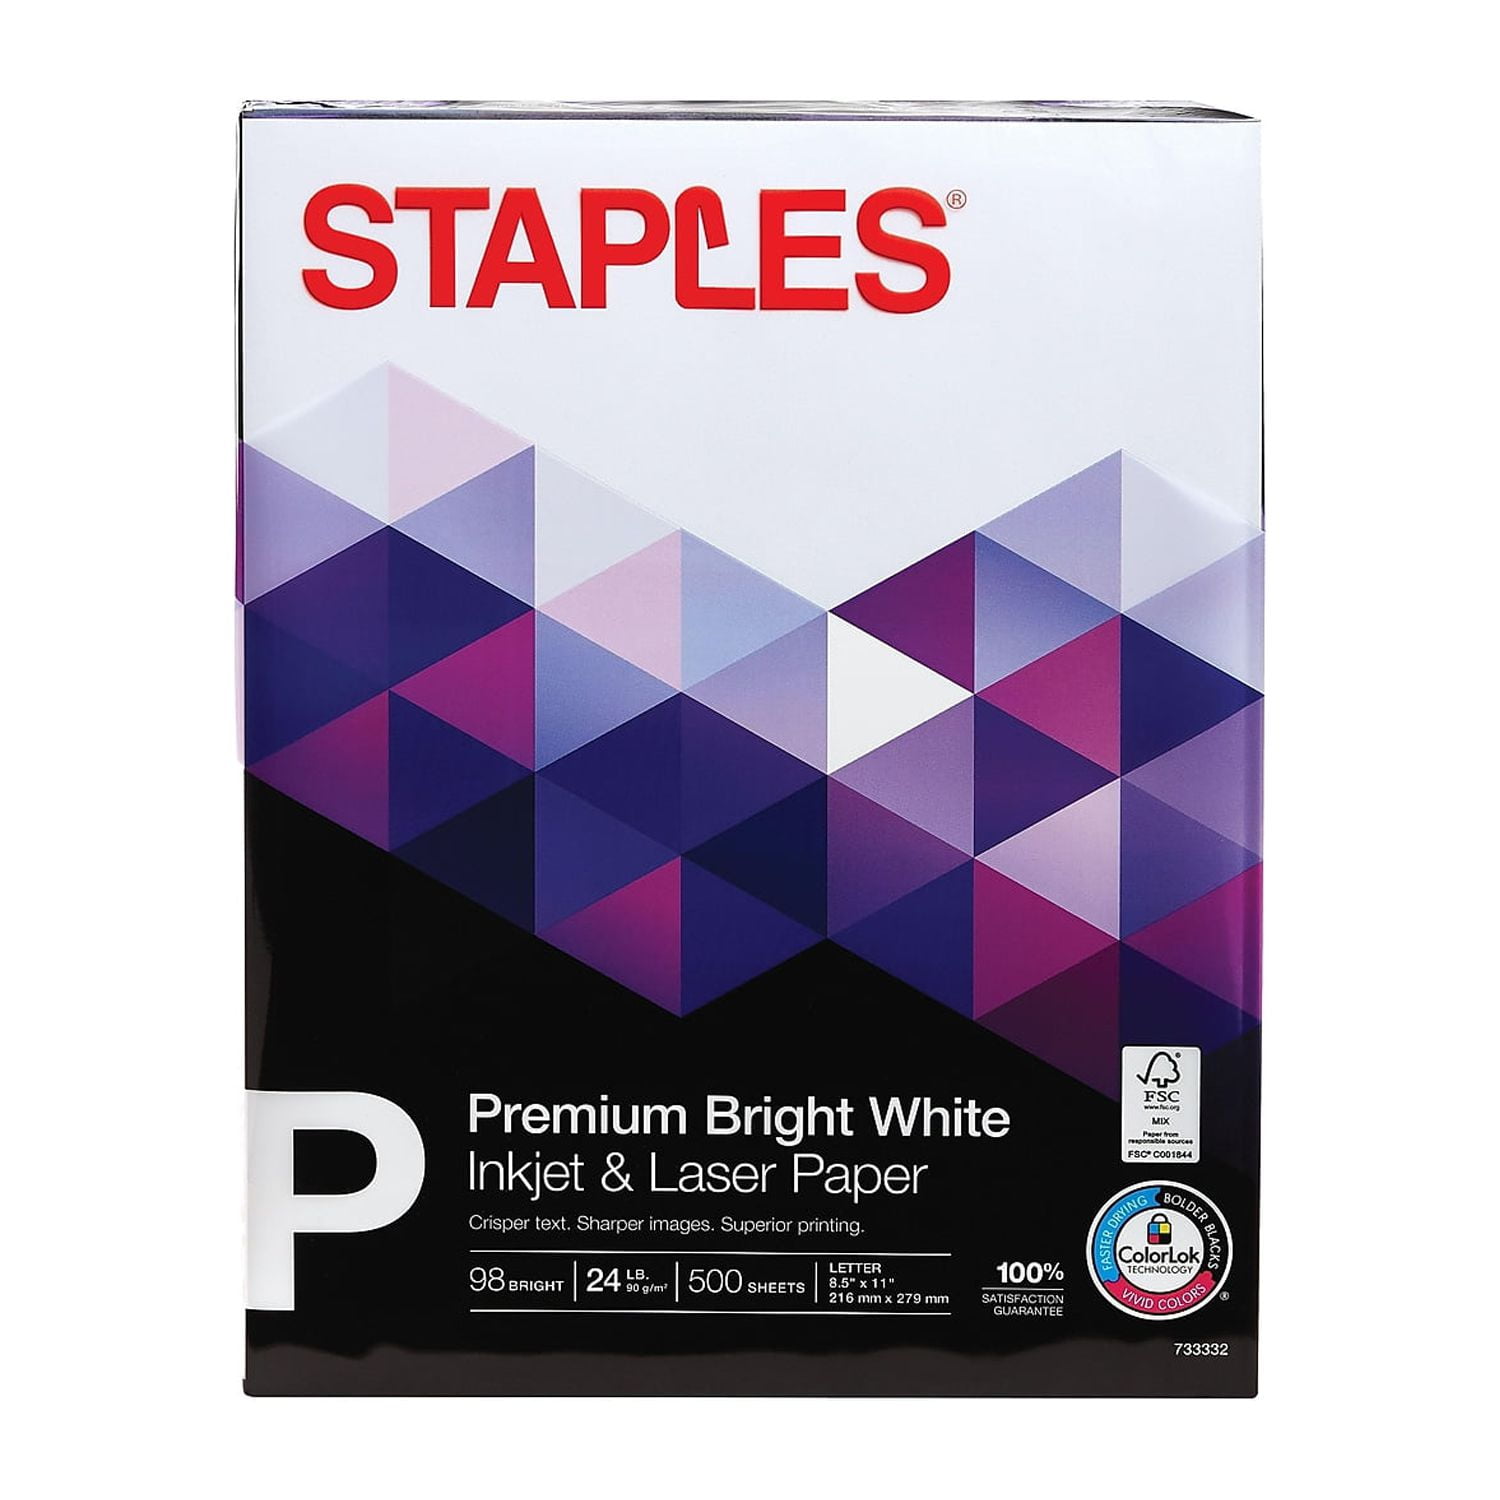 Staples Multiuse Copy Paper, 8.5 x 11, 20 lbs., 94 Brightness, 500  Sheets/Ream, 8 Reams/Carton (26860-CC)